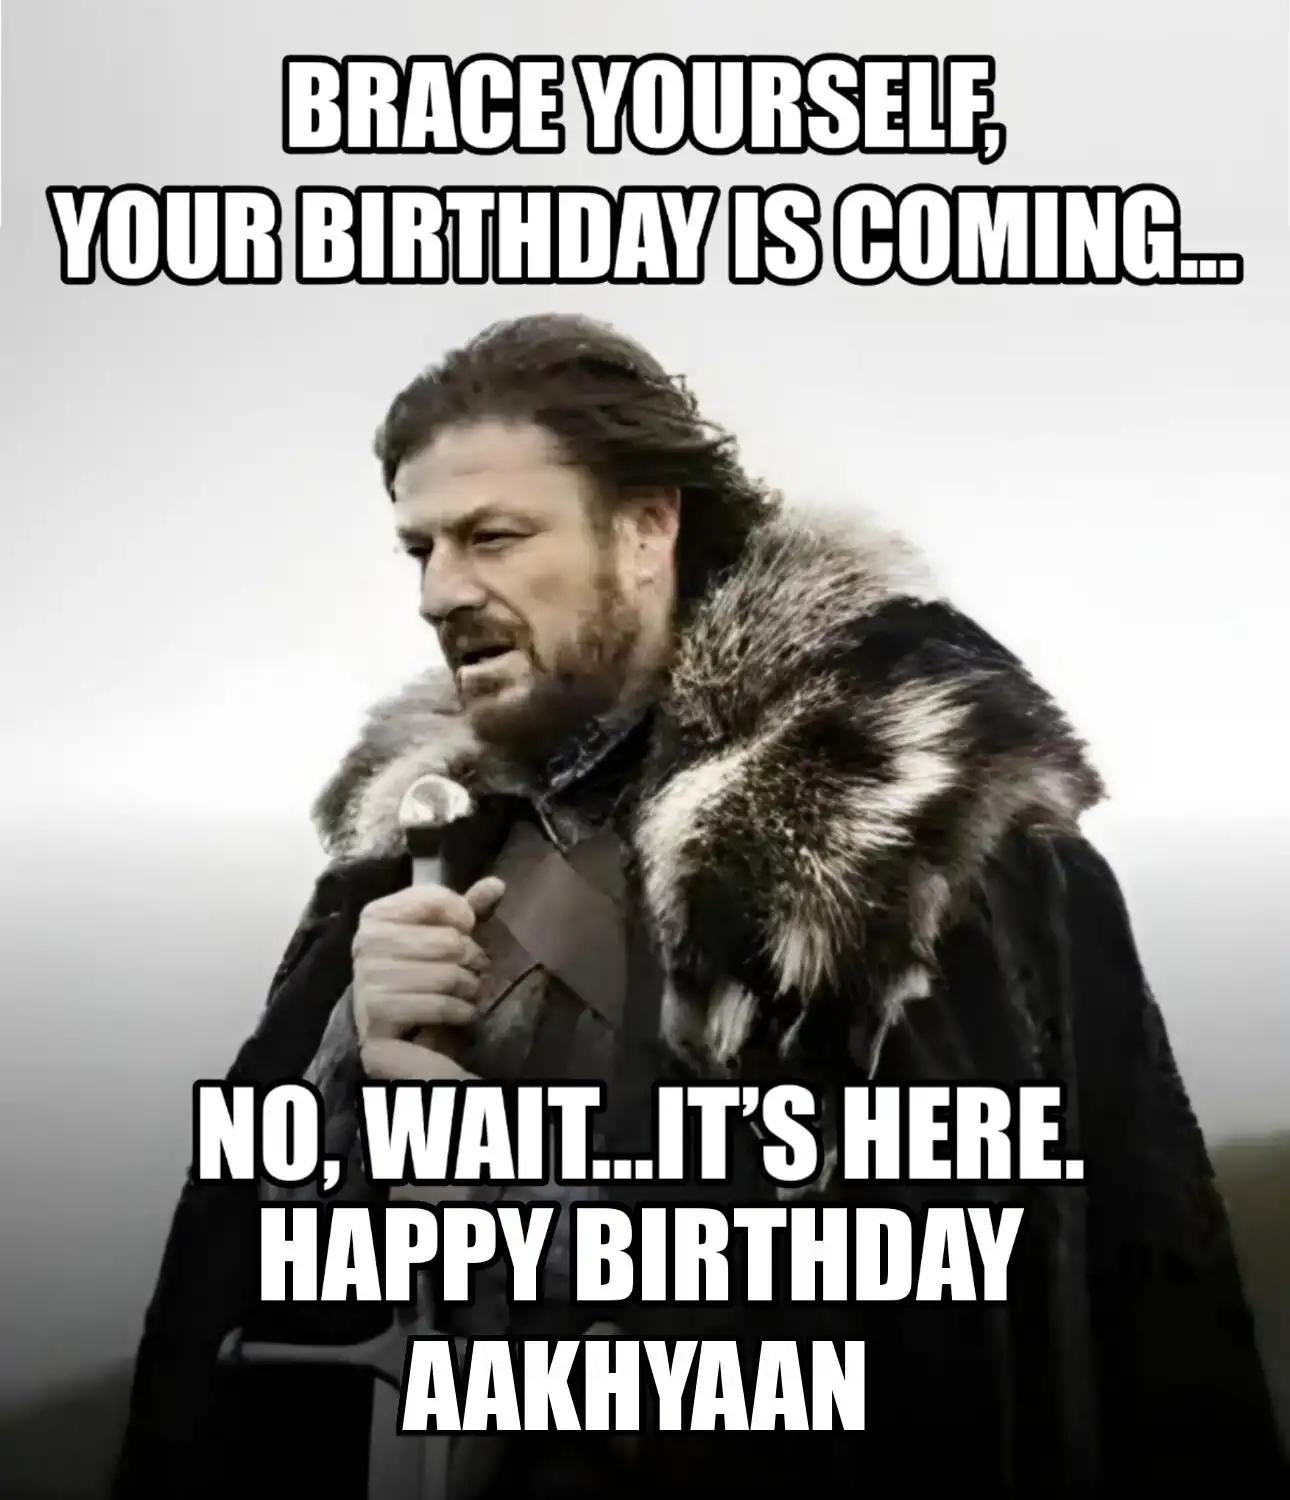 Happy Birthday Aakhyaan Brace Yourself Your Birthday Is Coming Meme